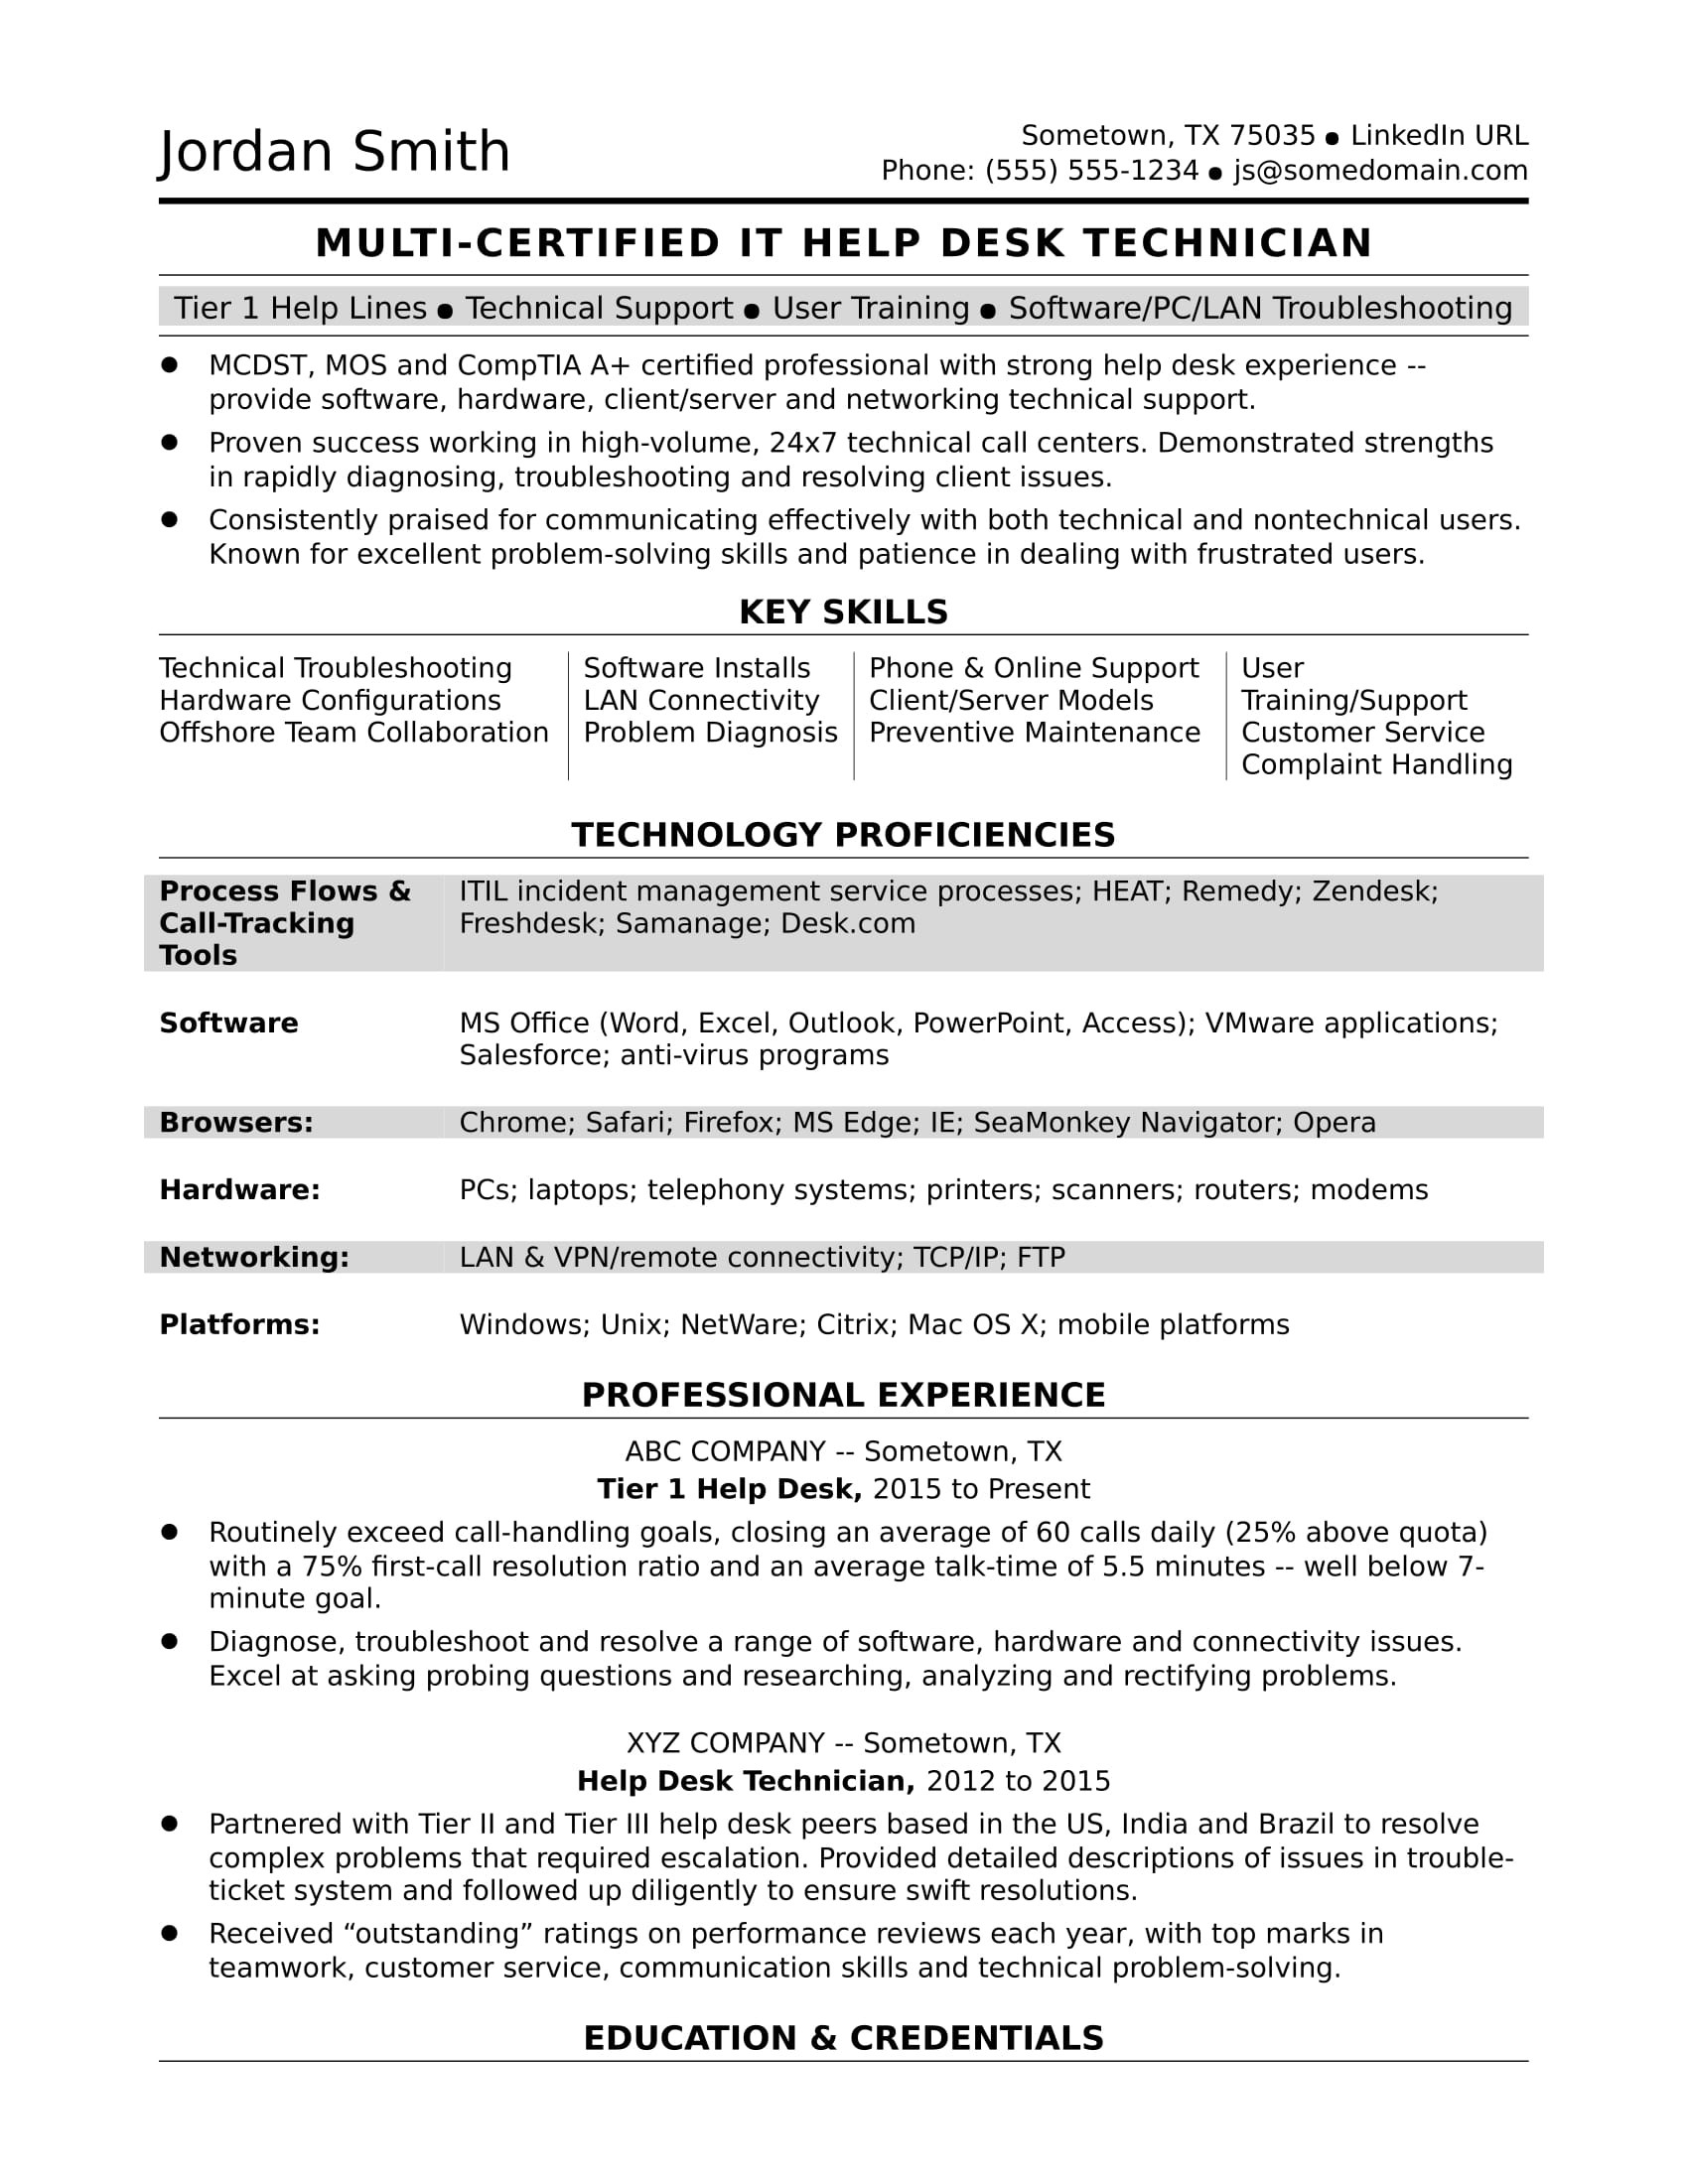 Sample Resume Of Email Support Executive Sample Resume for A Midlevel It Help Desk Professional Monster.com